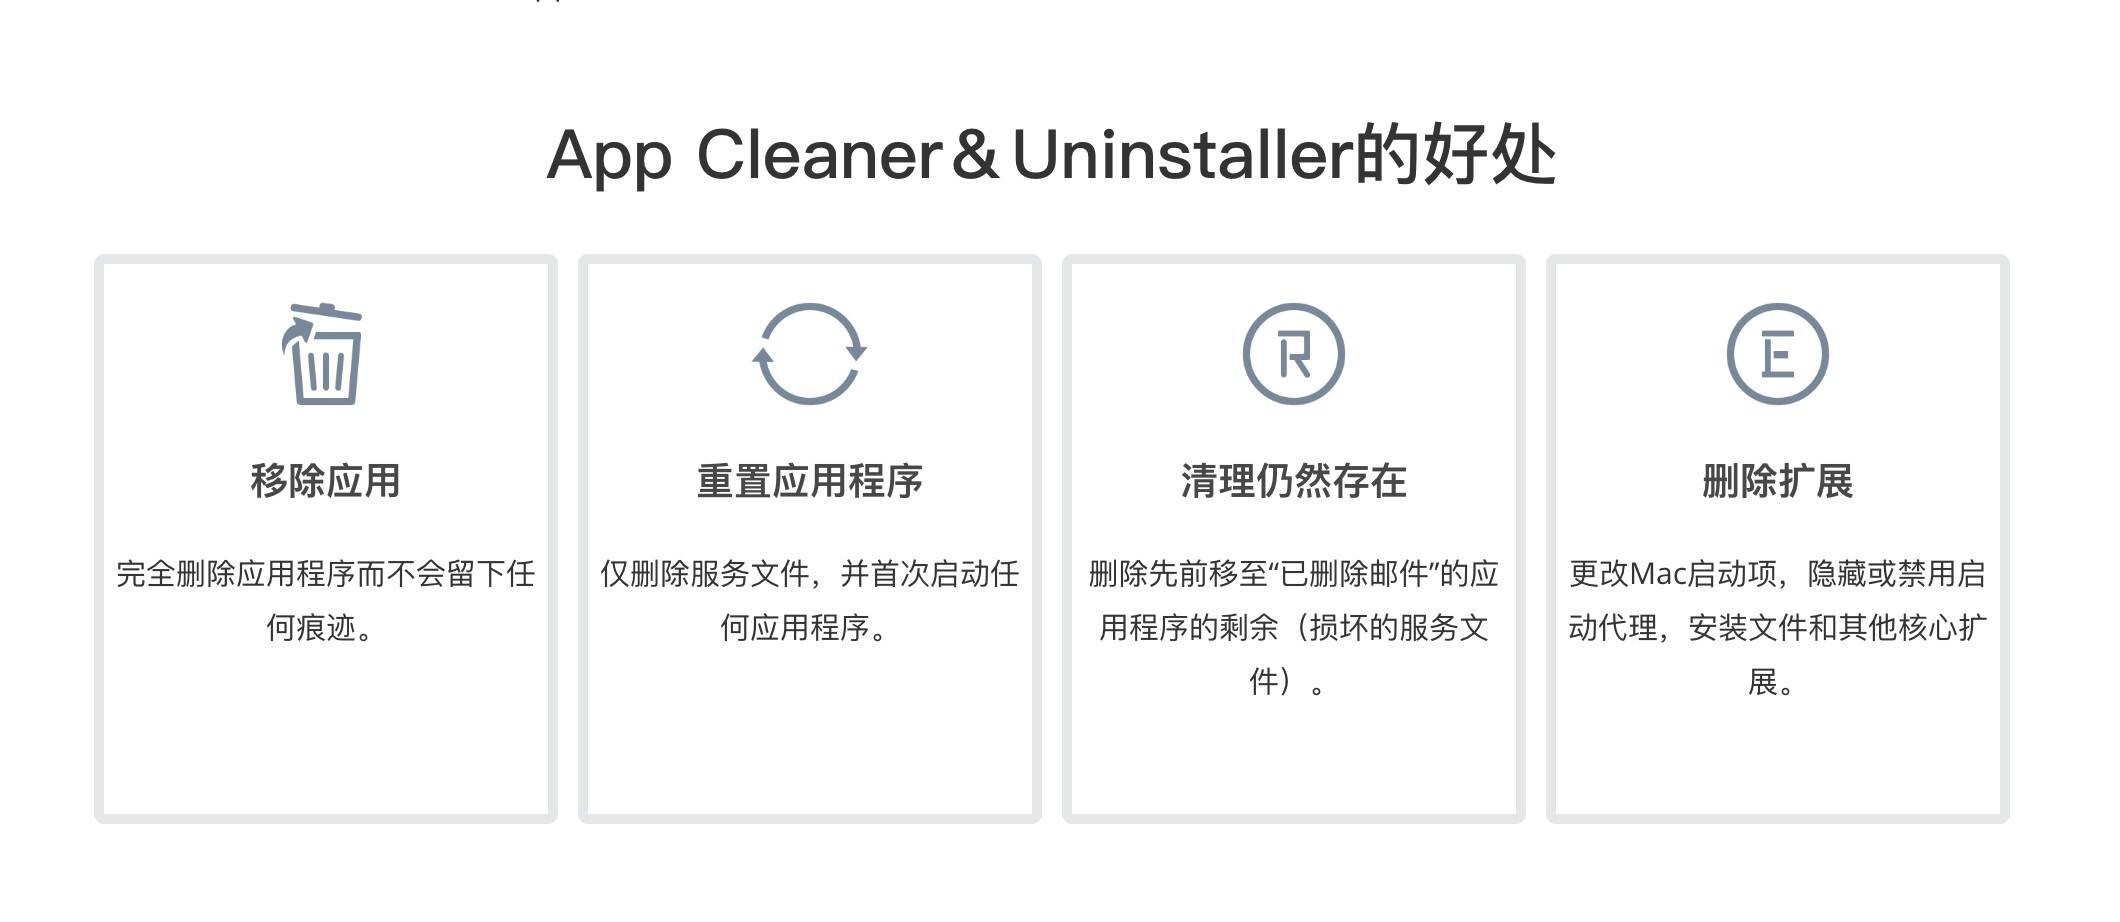 Mac应用清理卸载工具 App Cleaner & Uninstaller Pro for Mac 中文特别版